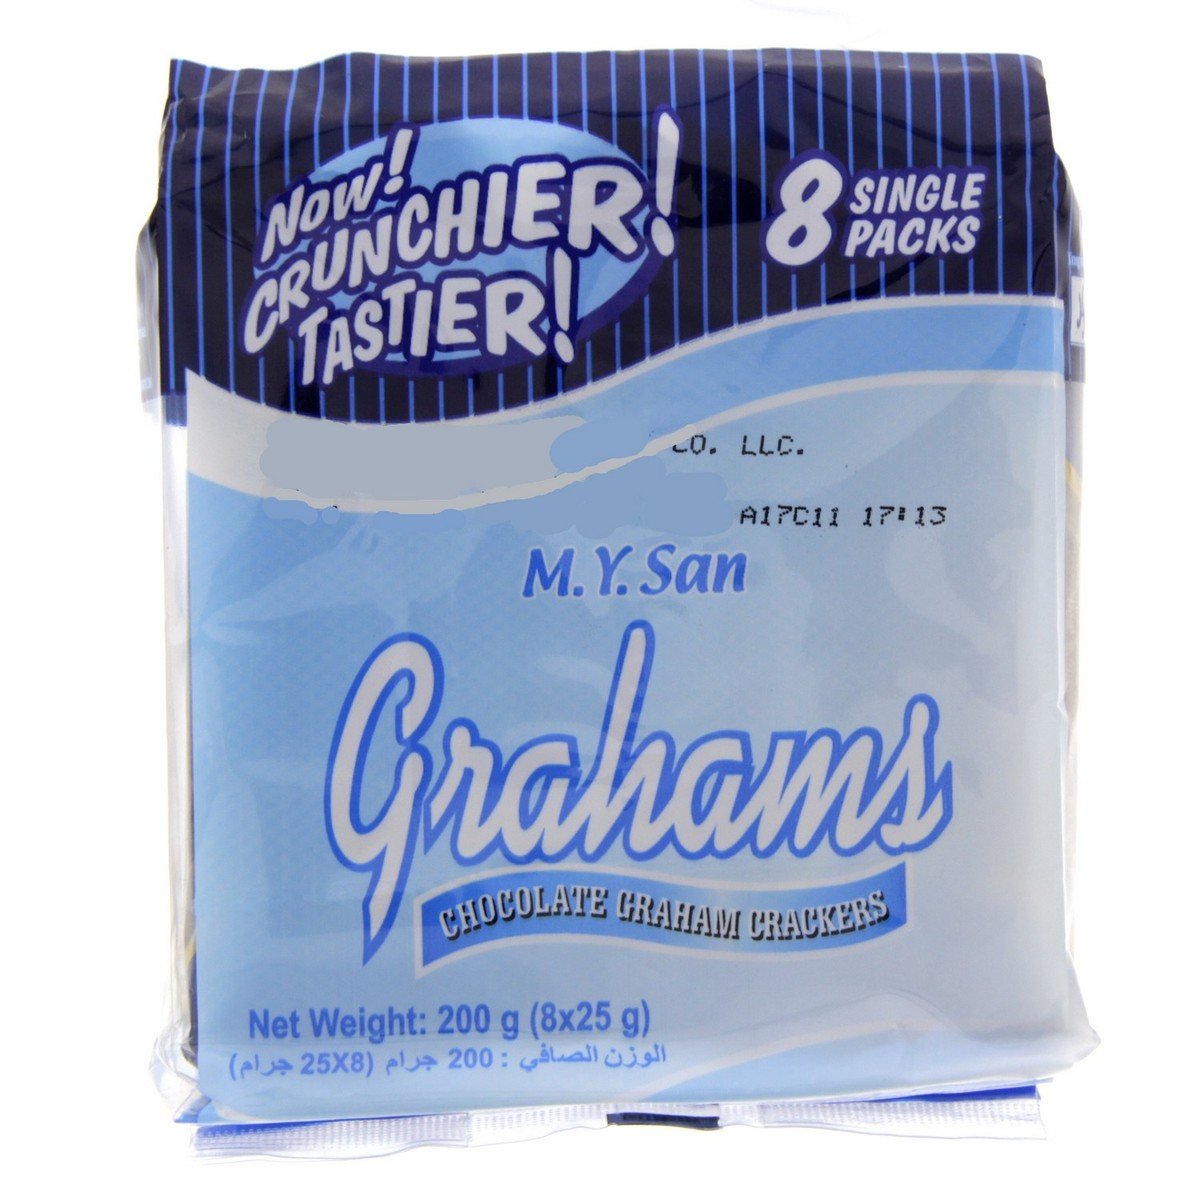 Grahams Chocolate Crackers 200g